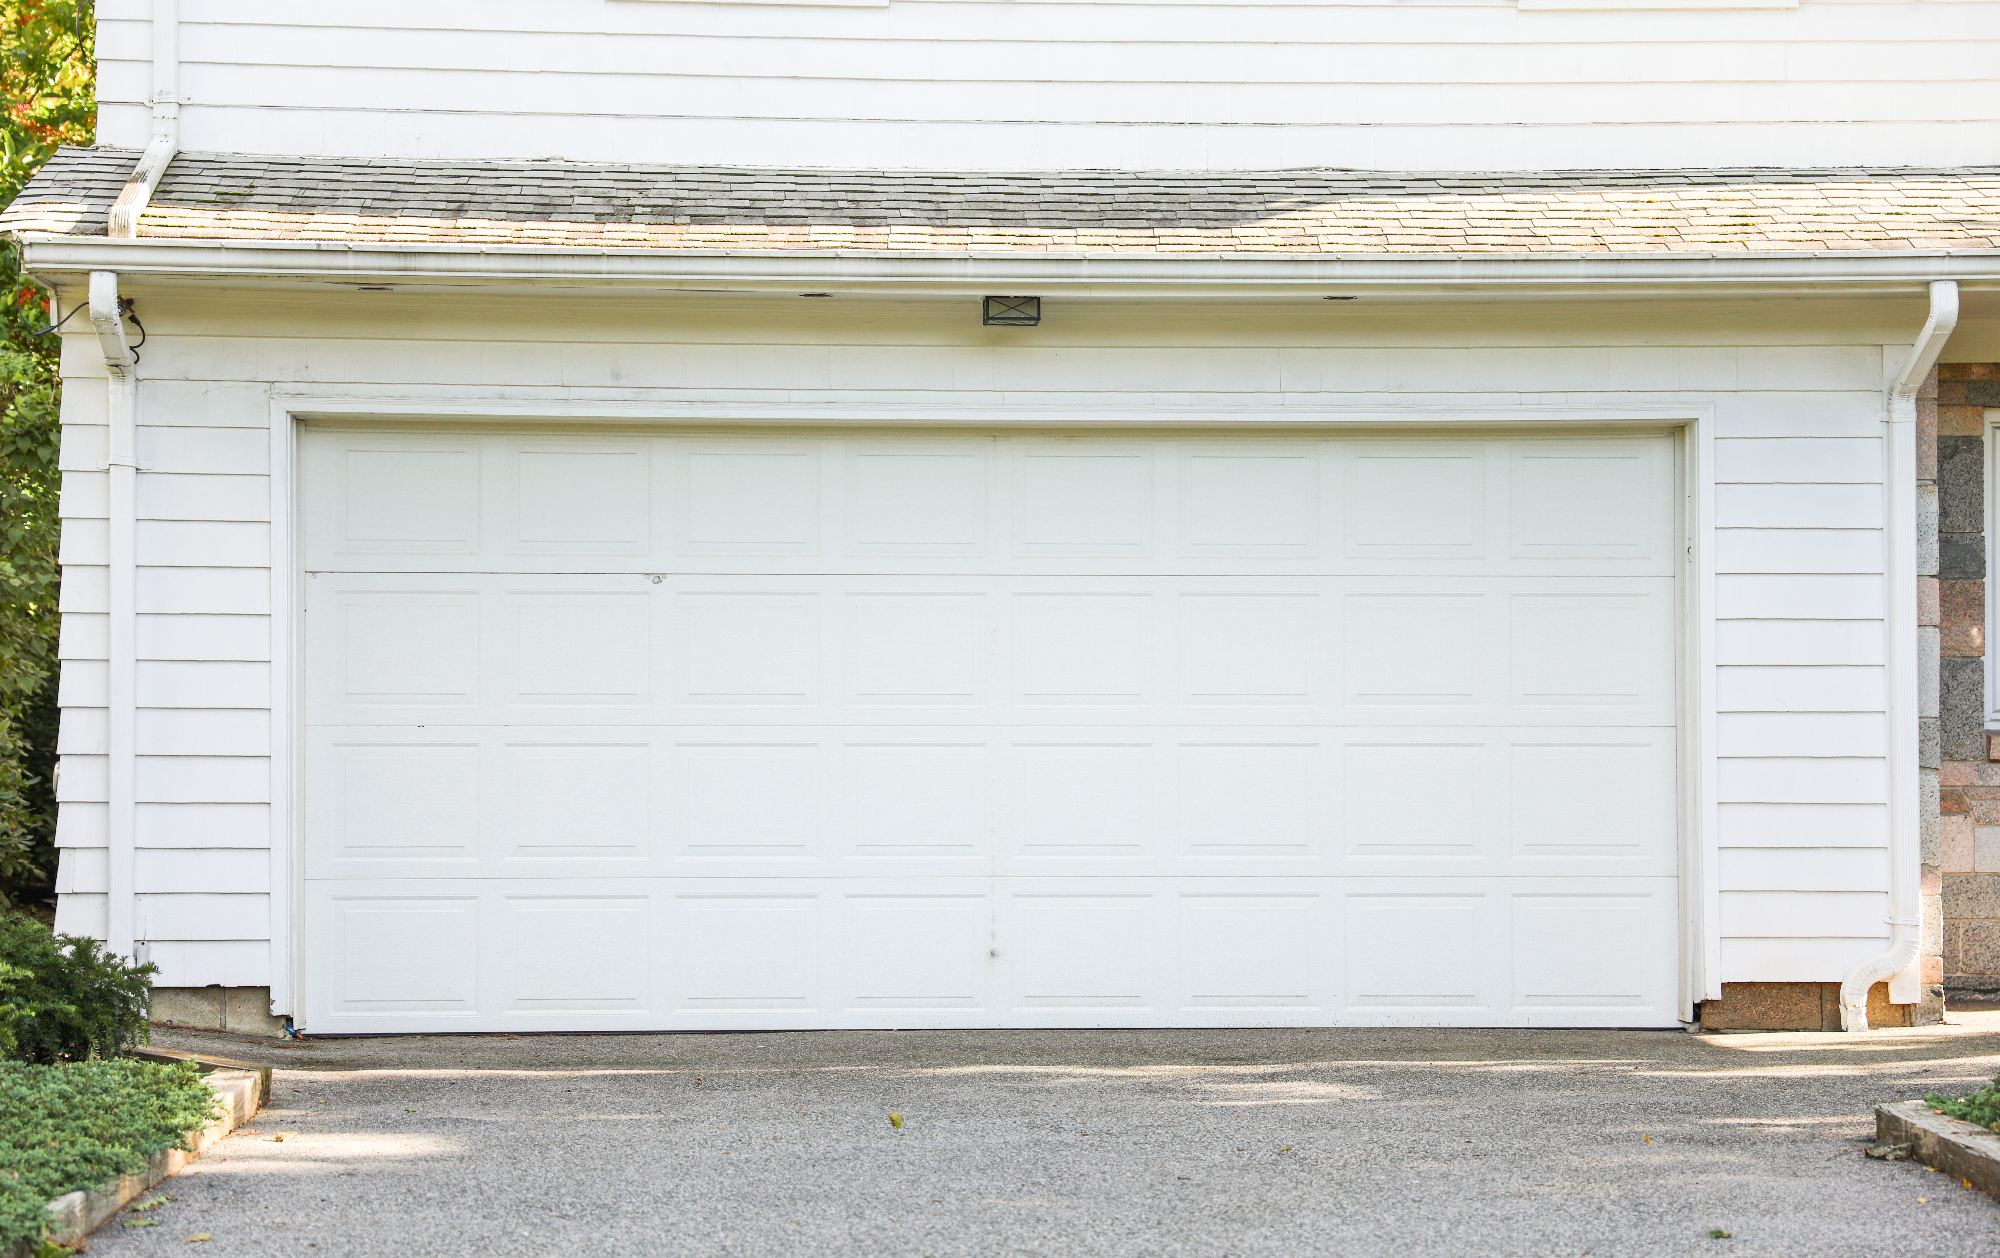 Garažna vrata so ključen element garaže